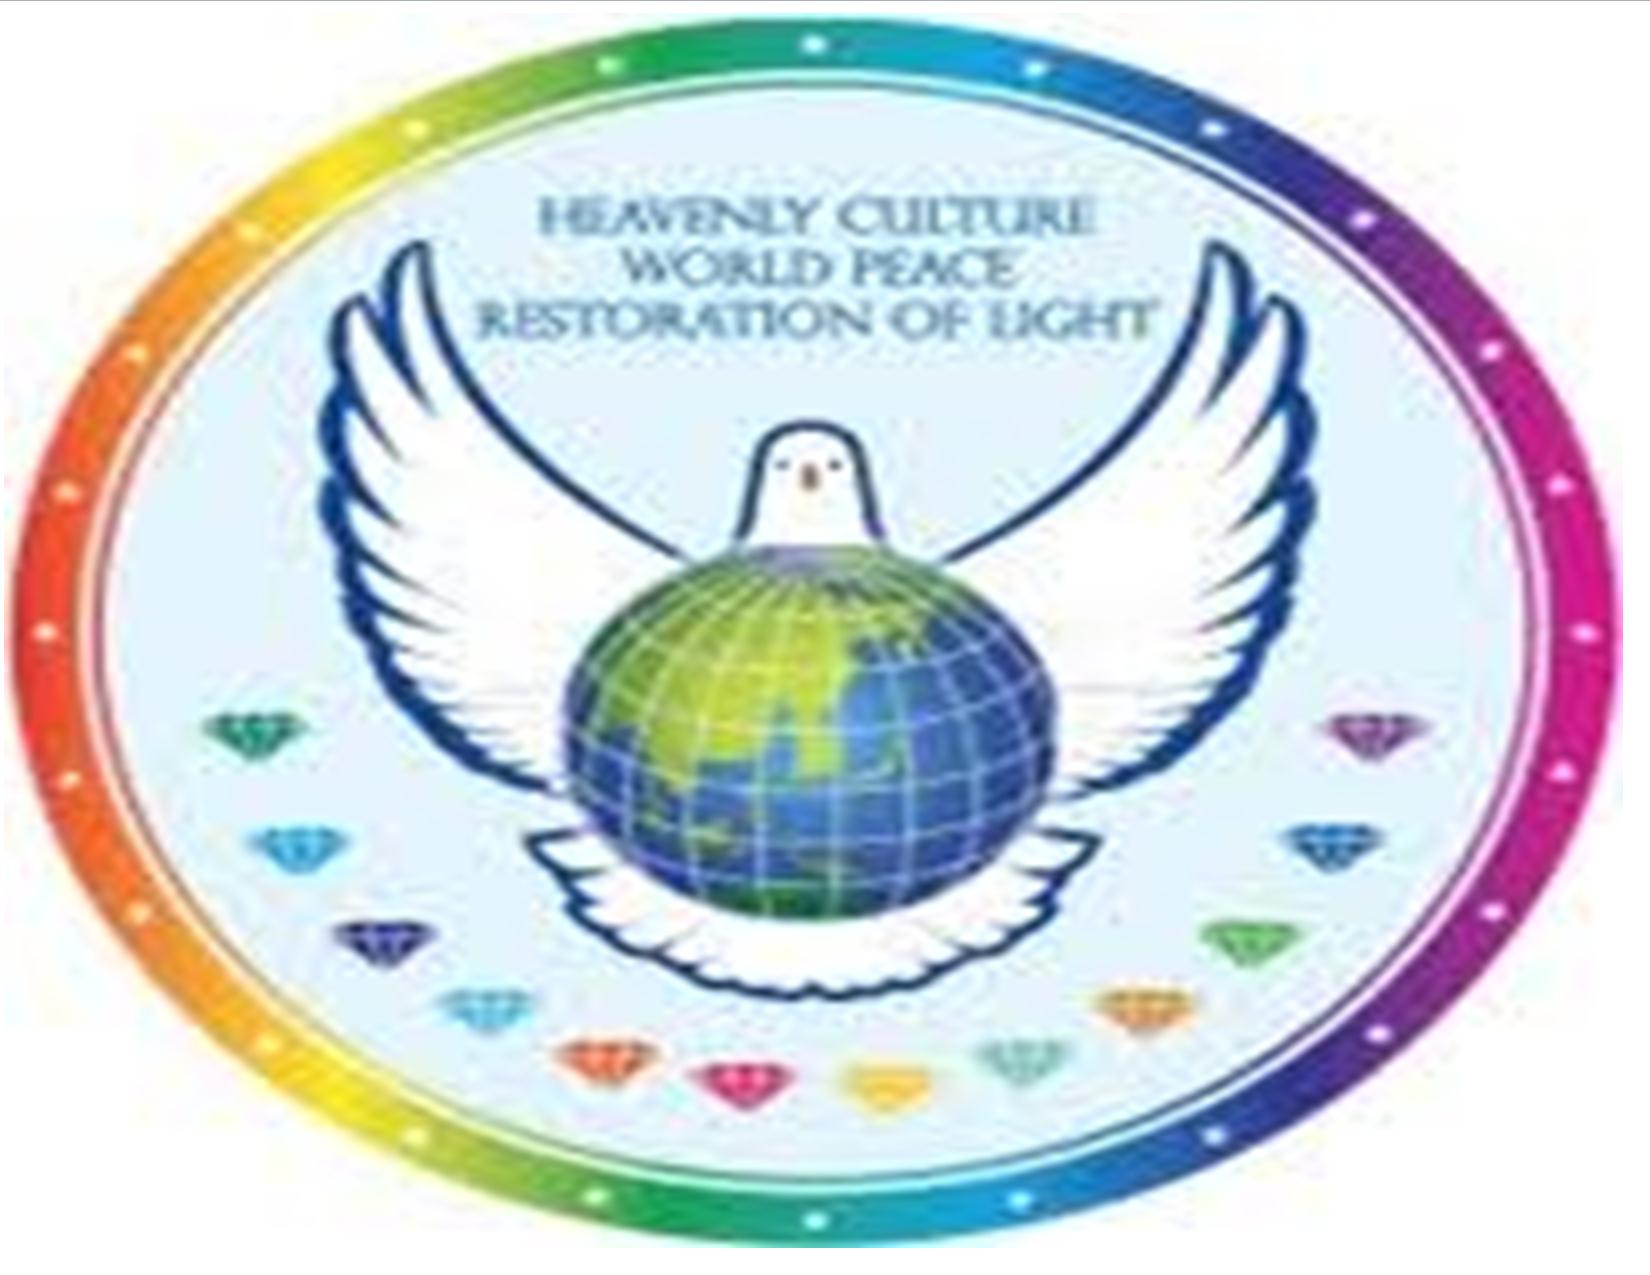 Heavenly Culture World Peace Restoration of Light